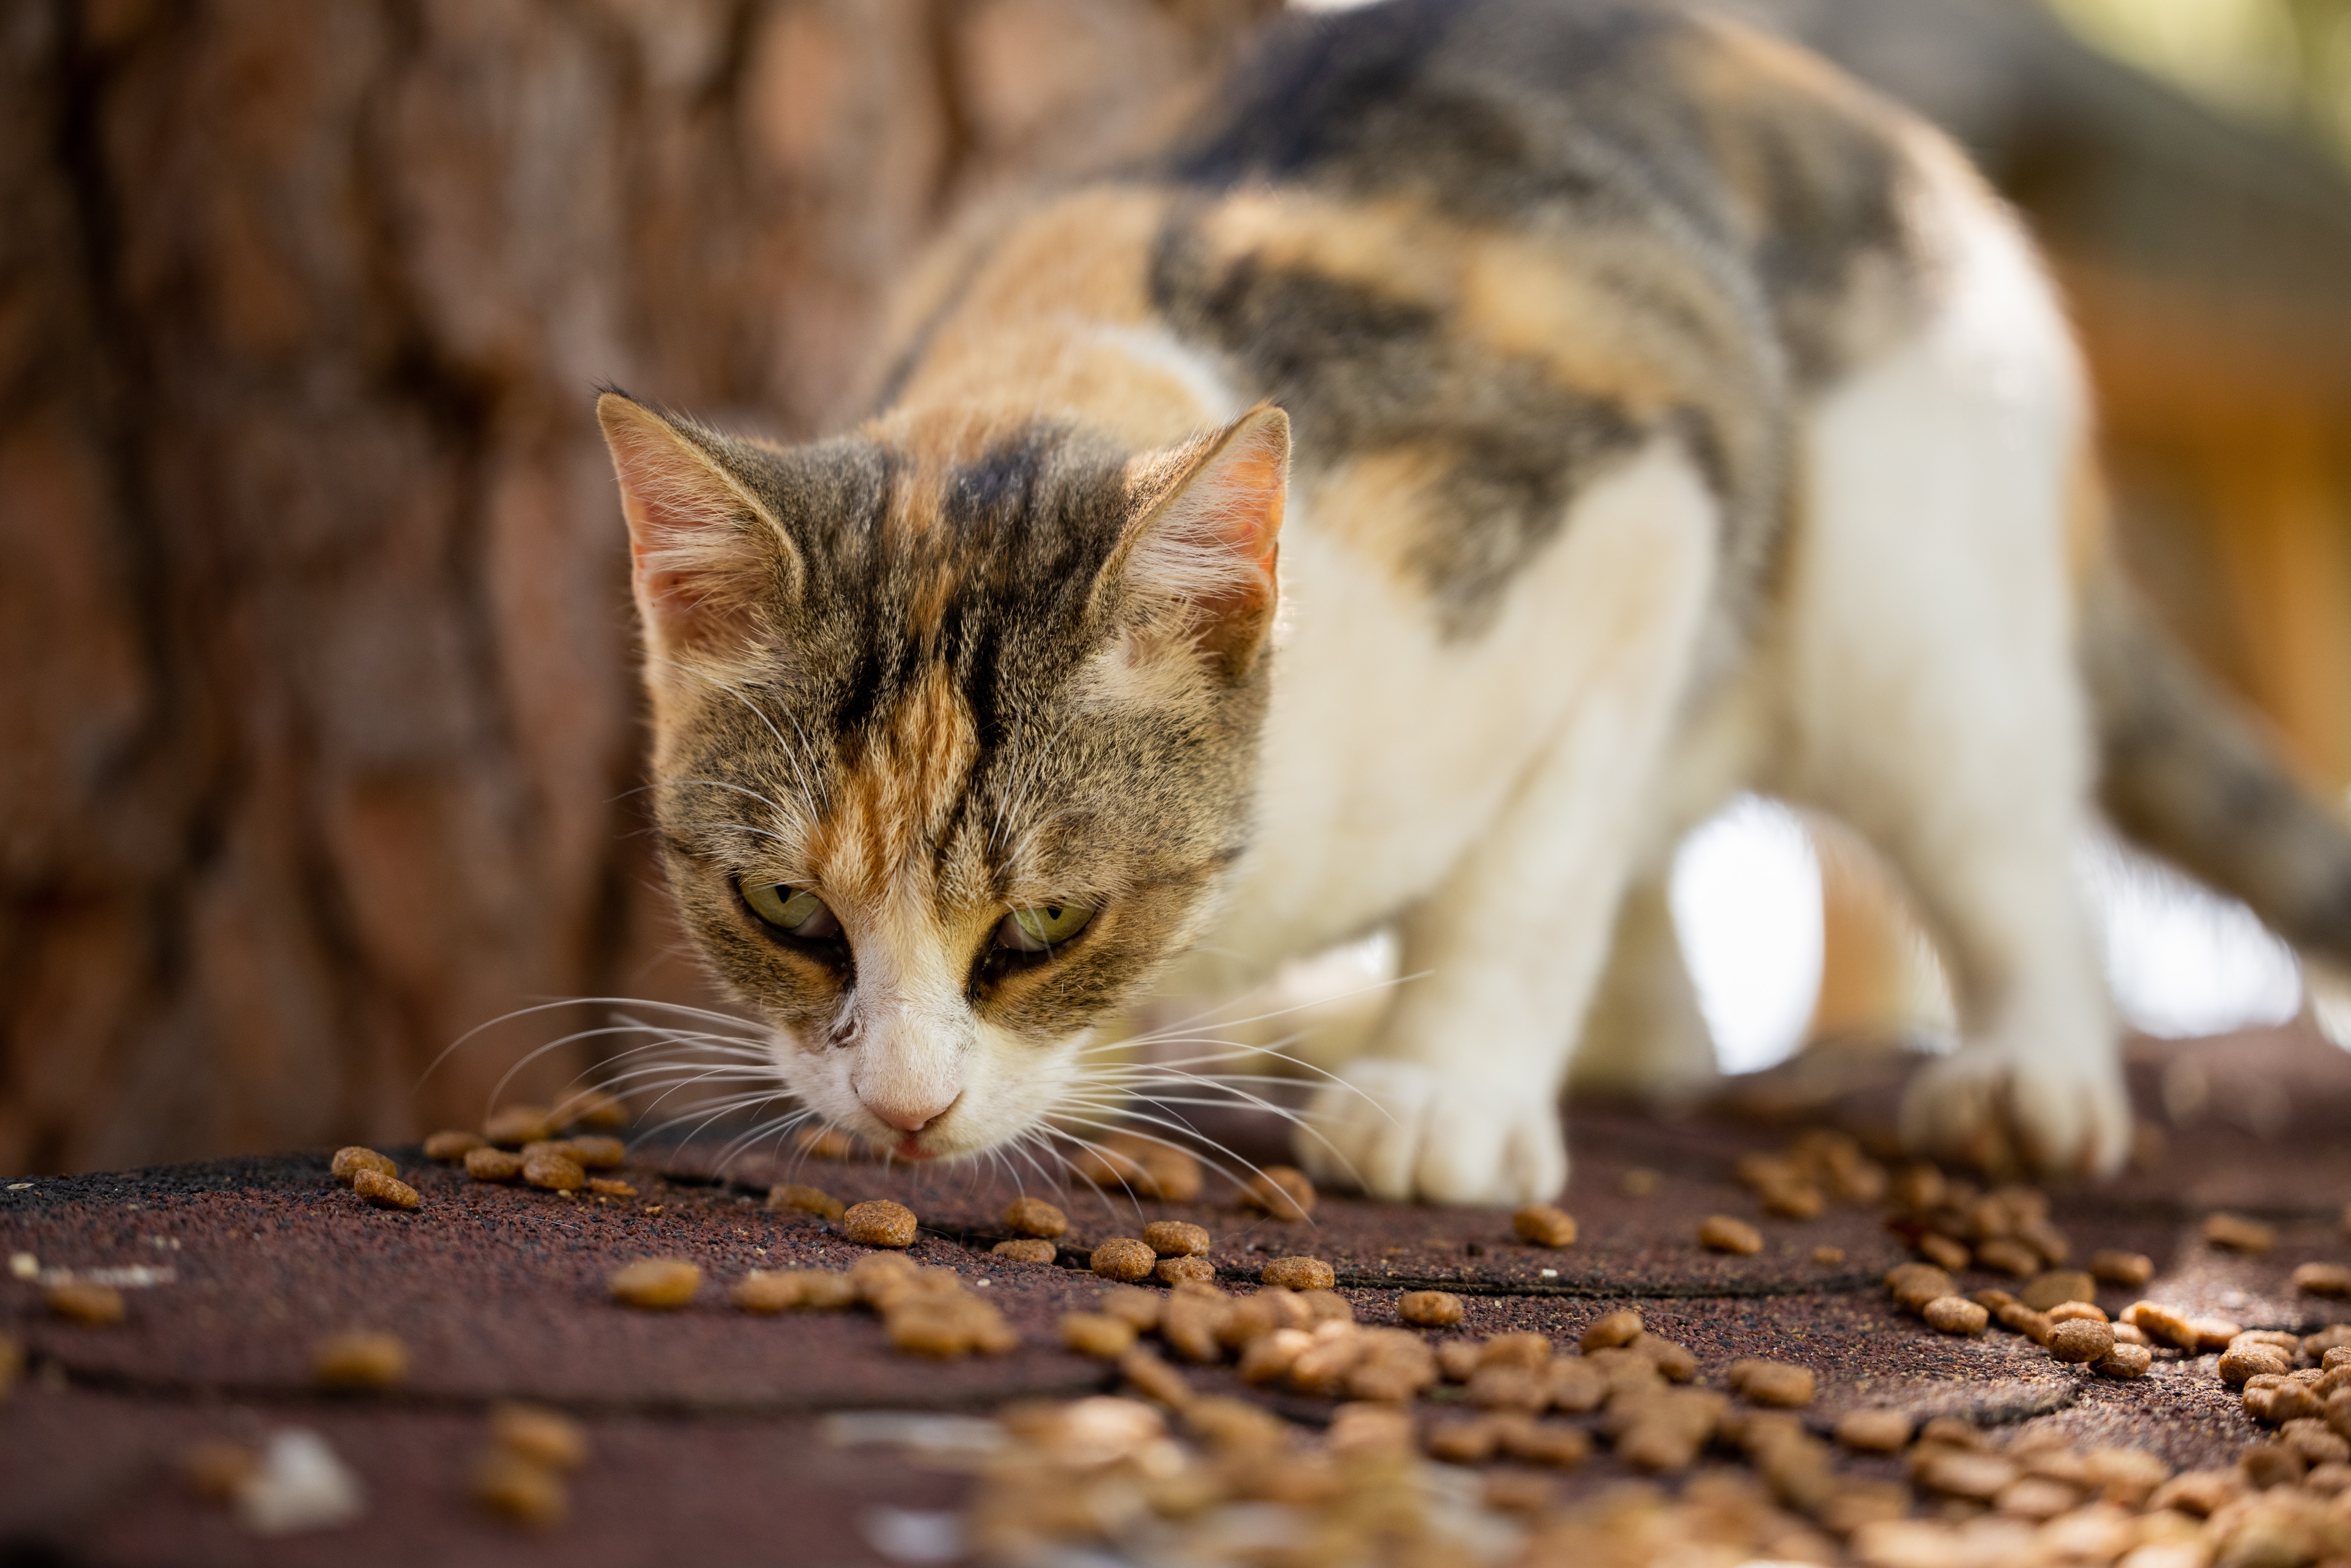 A cat Eating Pecans